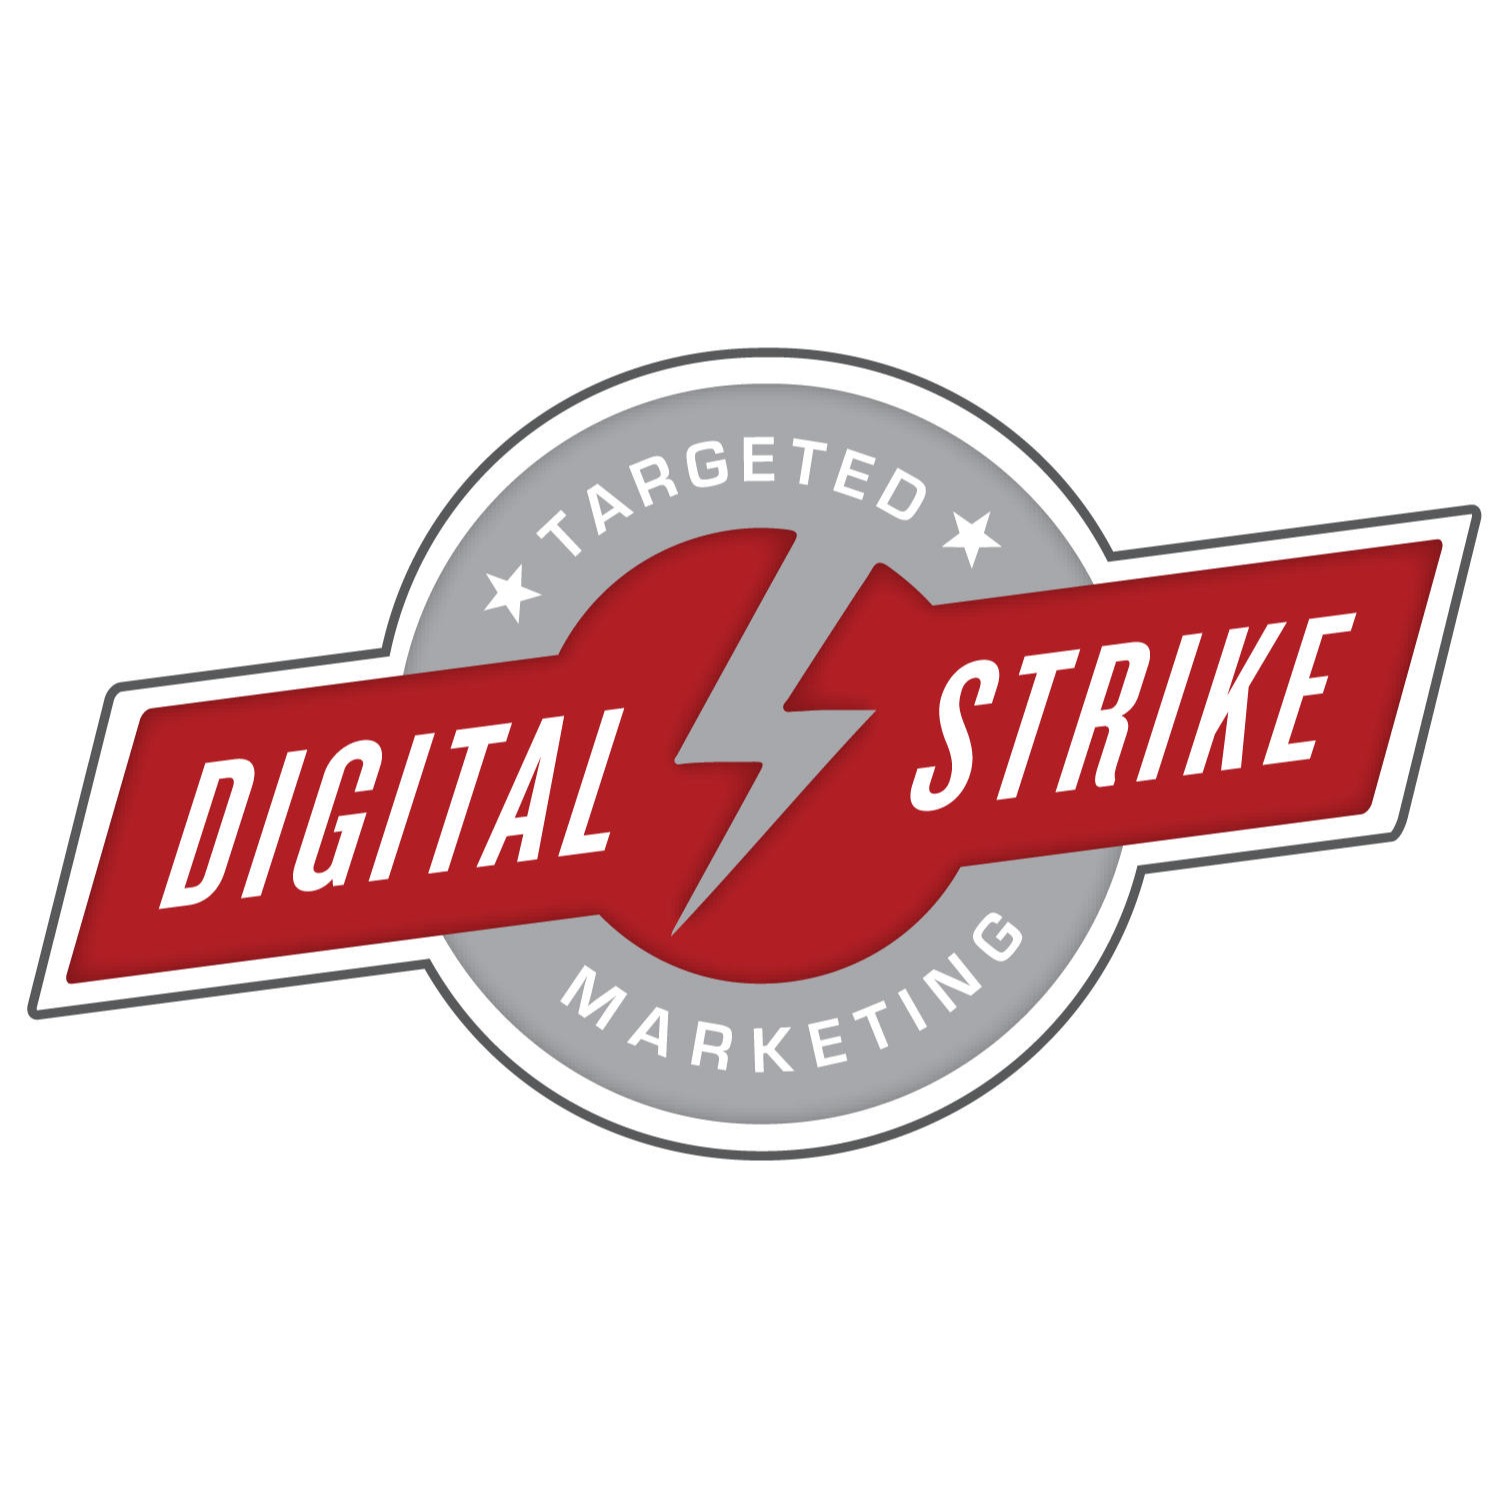 Digital Strike - Targeted Marketing Photo